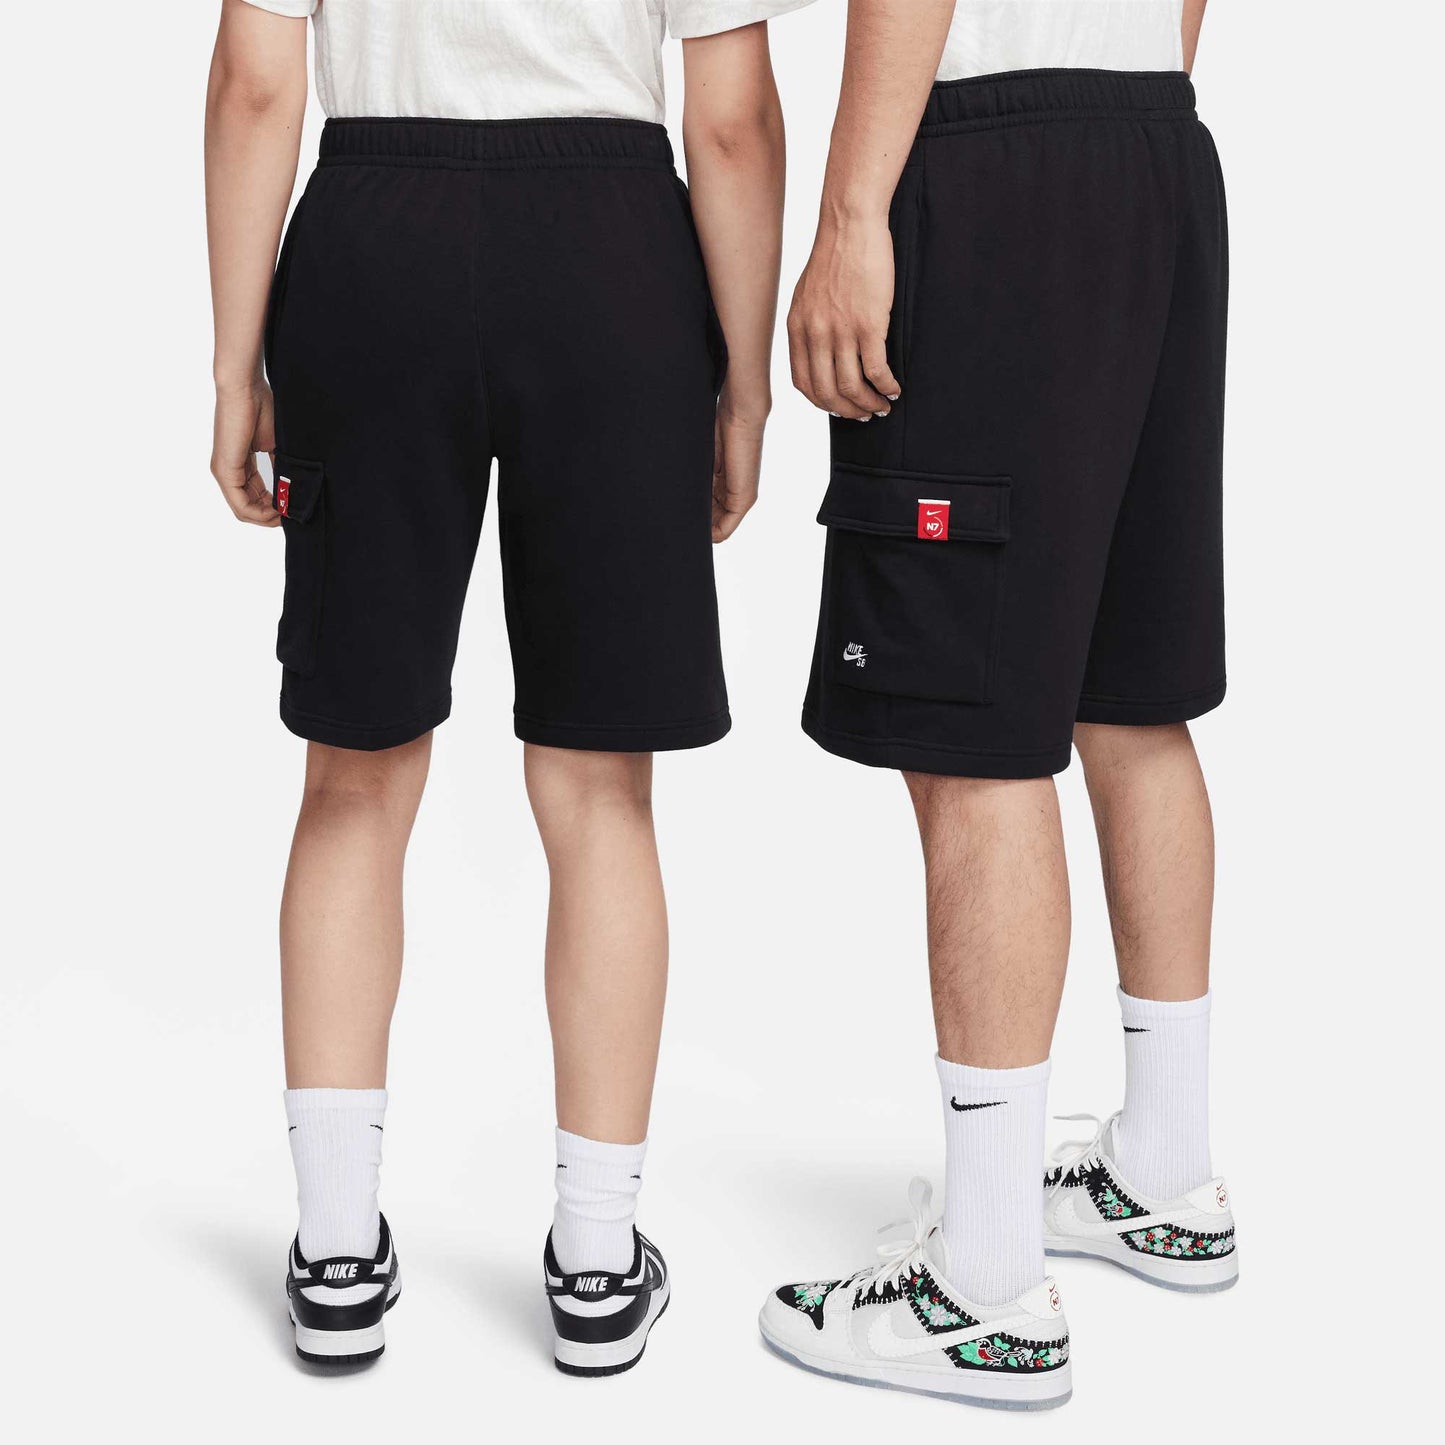 Nike SB N7 Fleece Cargo Shorts, black/university red - Tiki Room Skateboards - 2